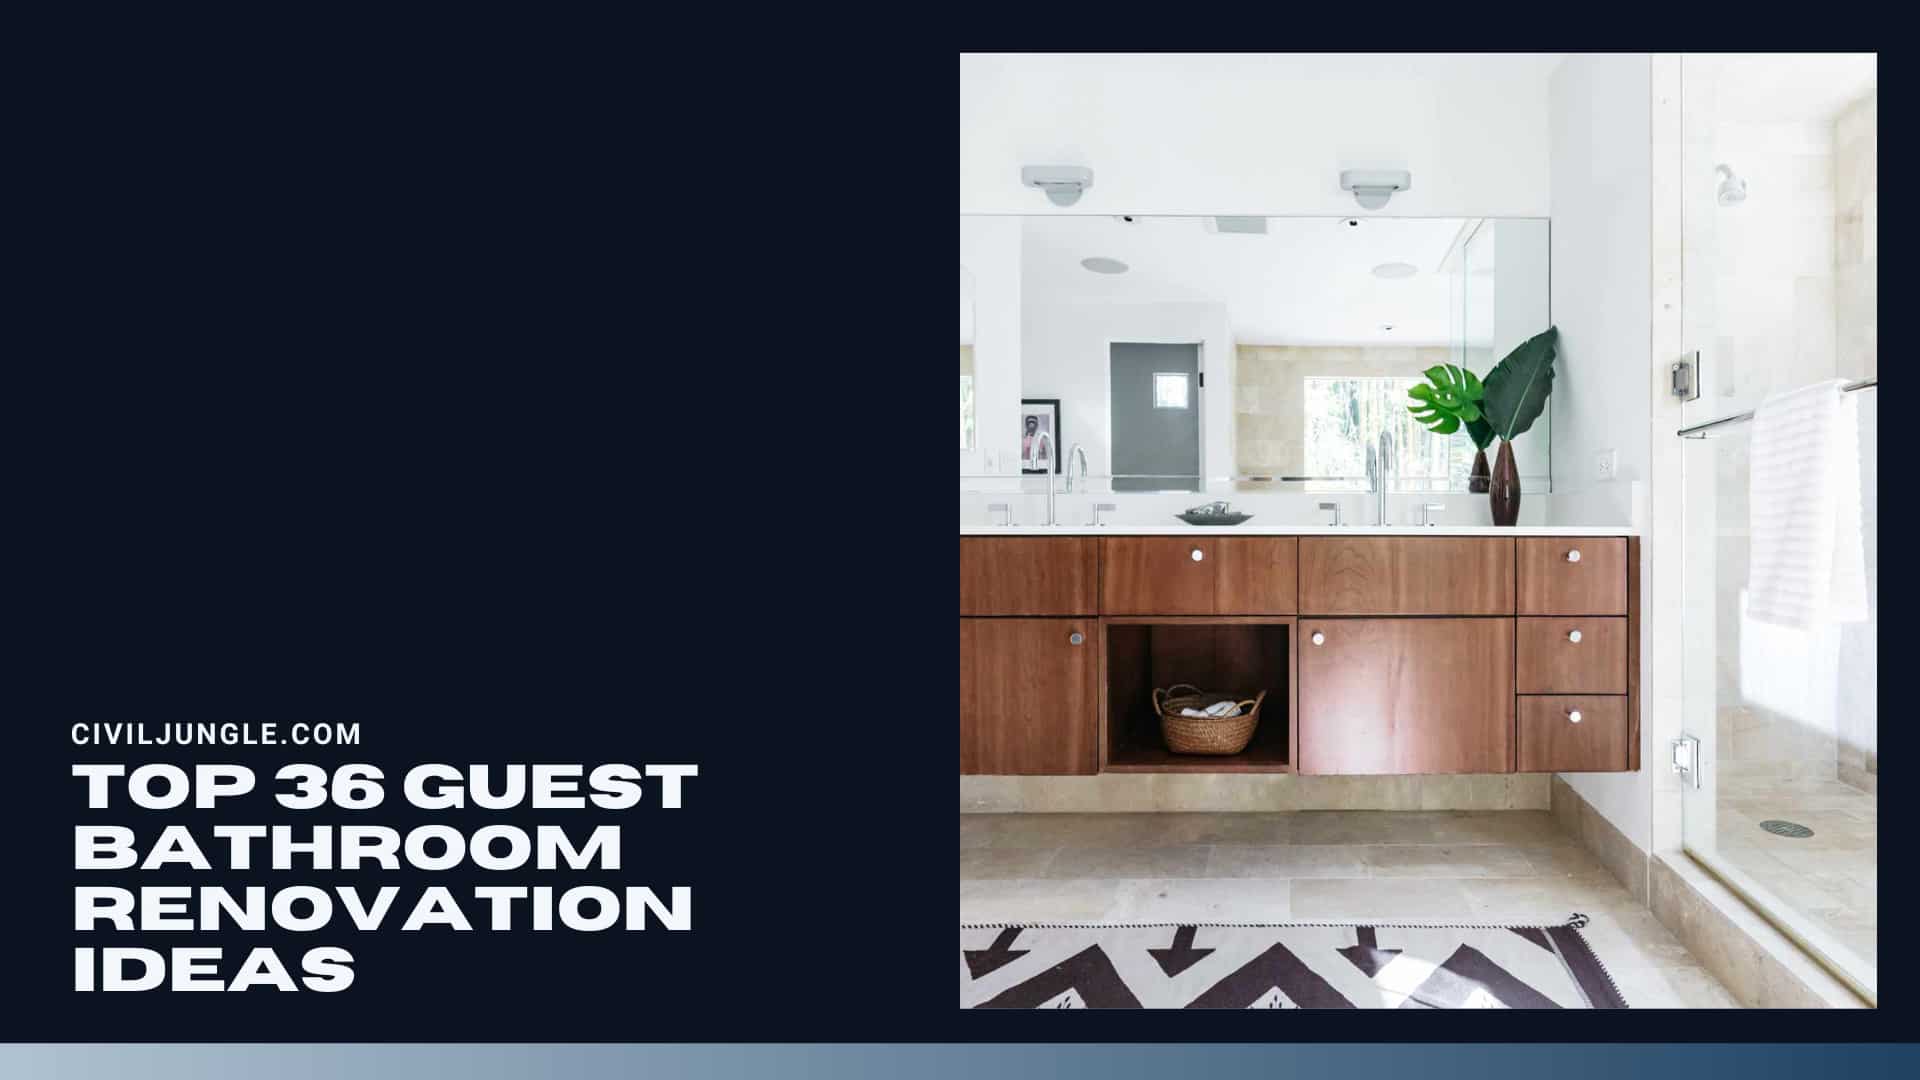 Top 36 Guest Bathroom Renovation Ideas